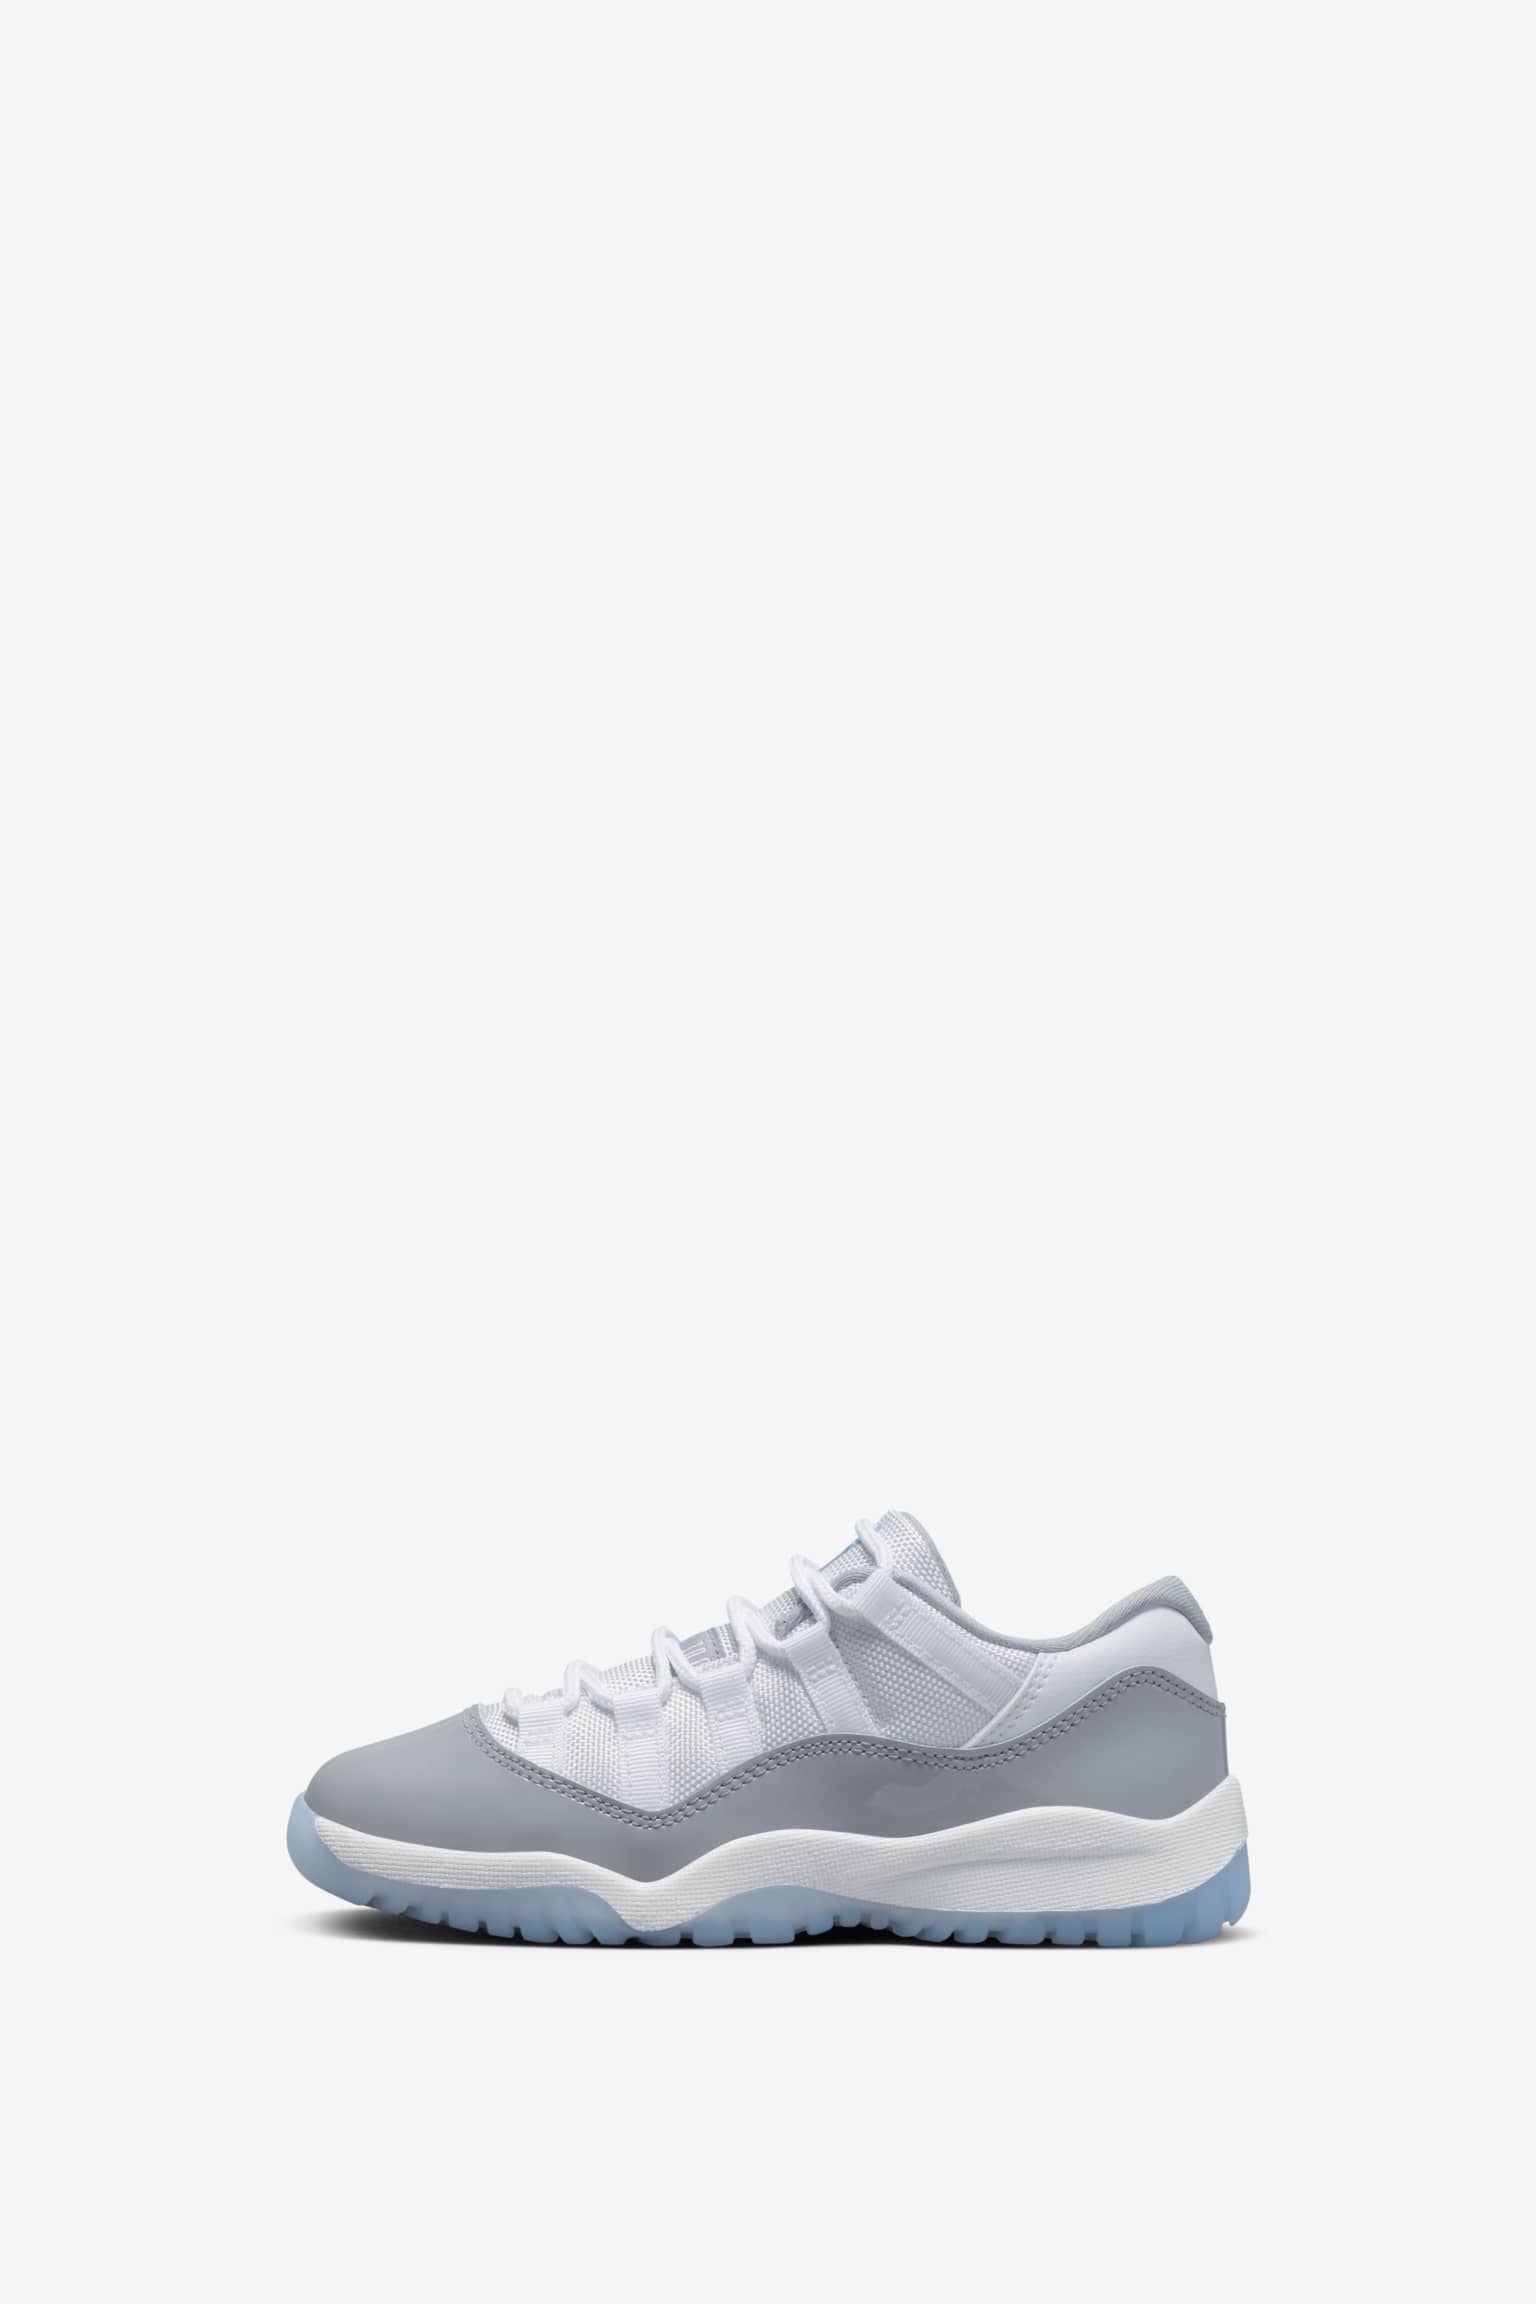 Air Jordan 11 Low 'Cement Grey' (AV2187-140) Release Date. Nike